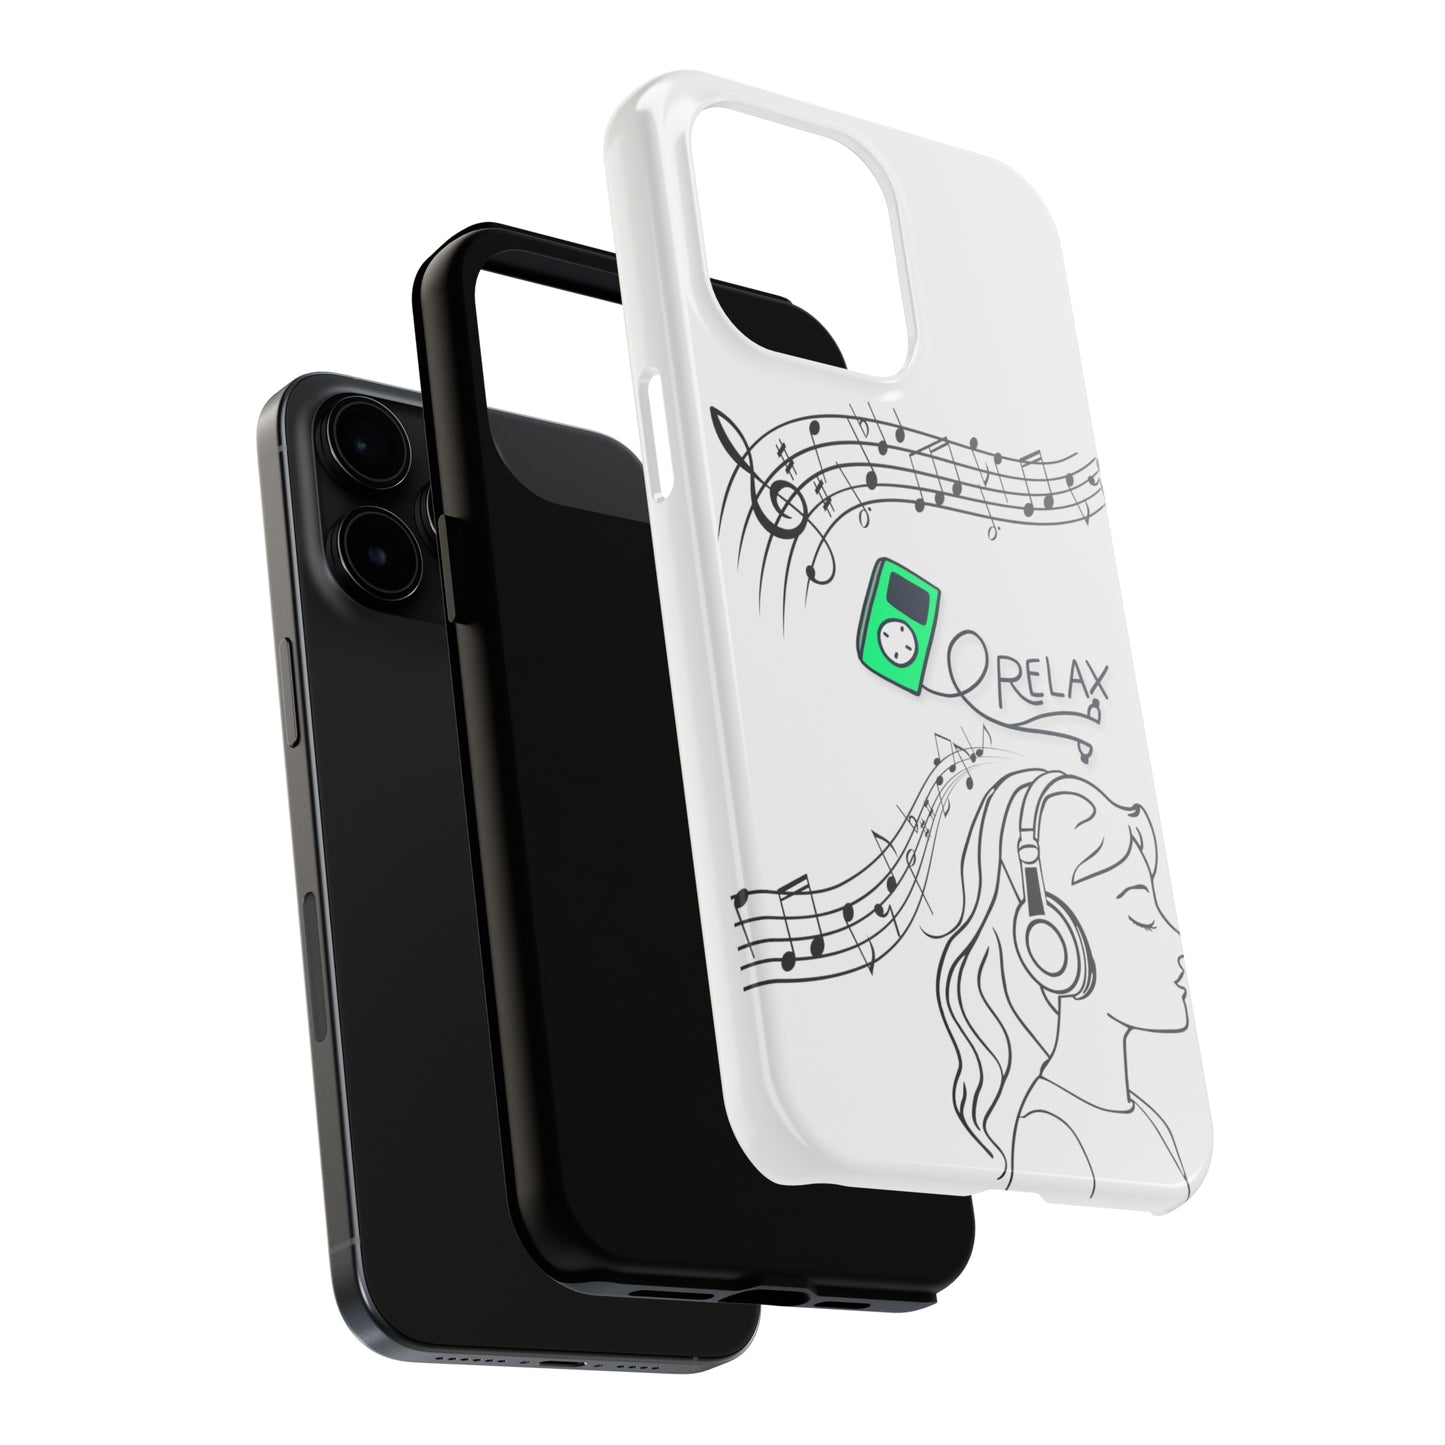 Relax: iPhone Tough Case Design - Wireless Charging - Superior Protection - Original Designs by TheGlassyLass.com